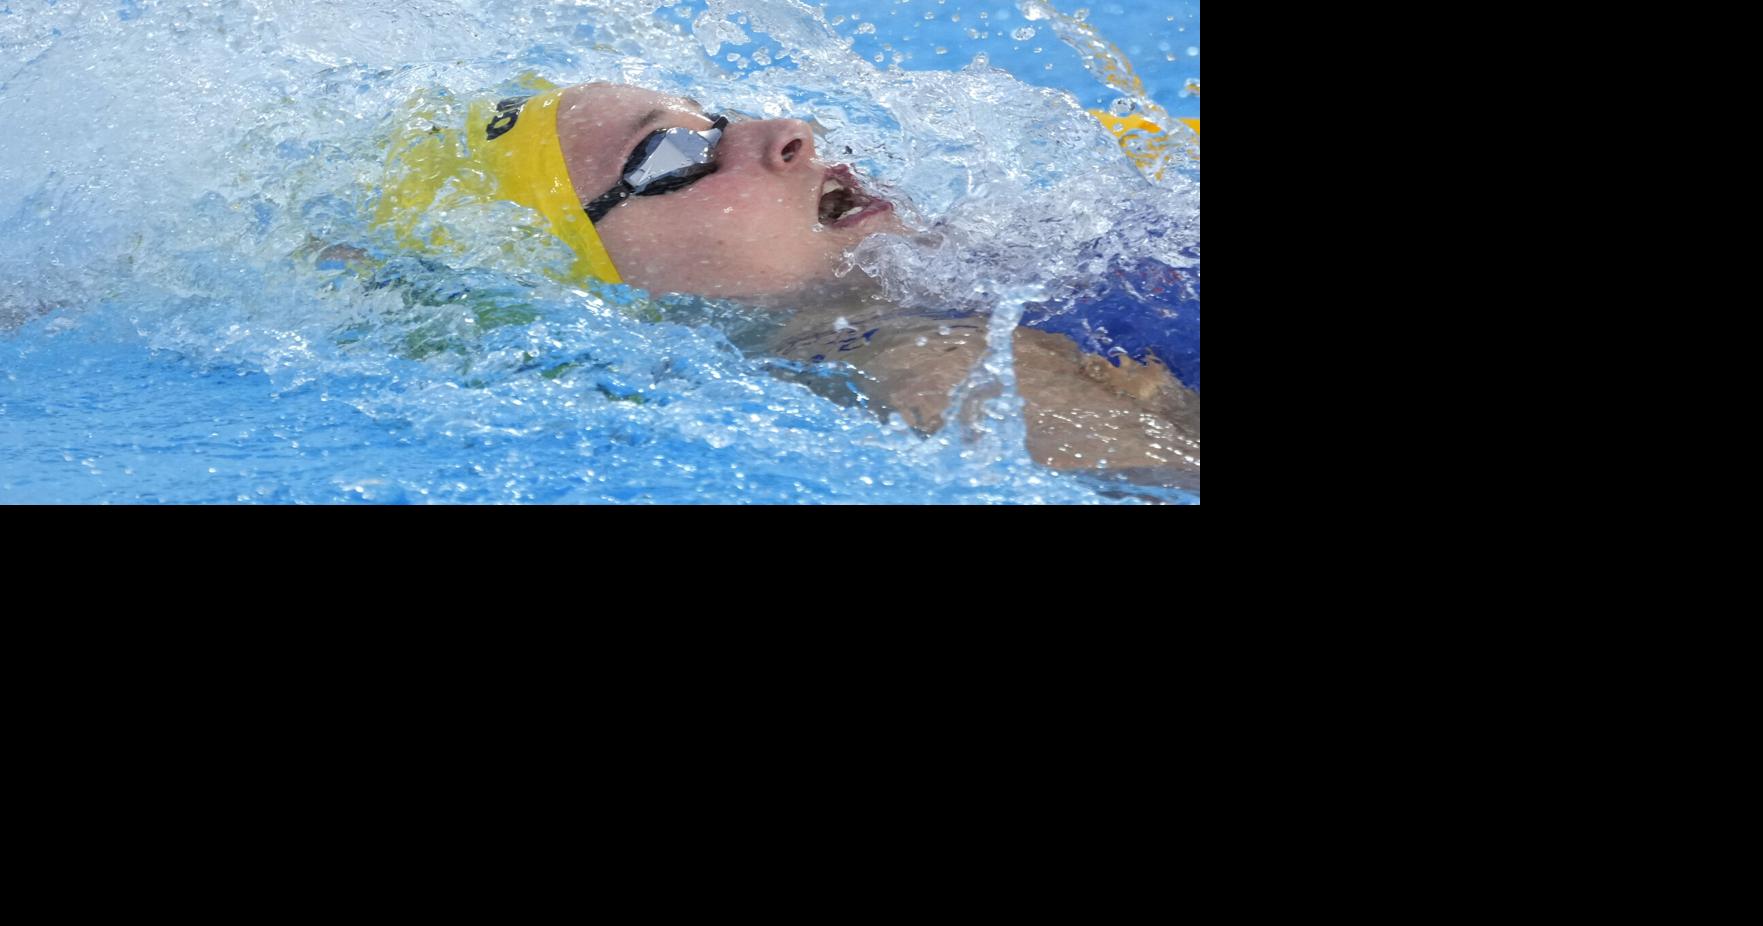 Serbia European Swimming Championships | National | idahostatejournal.com